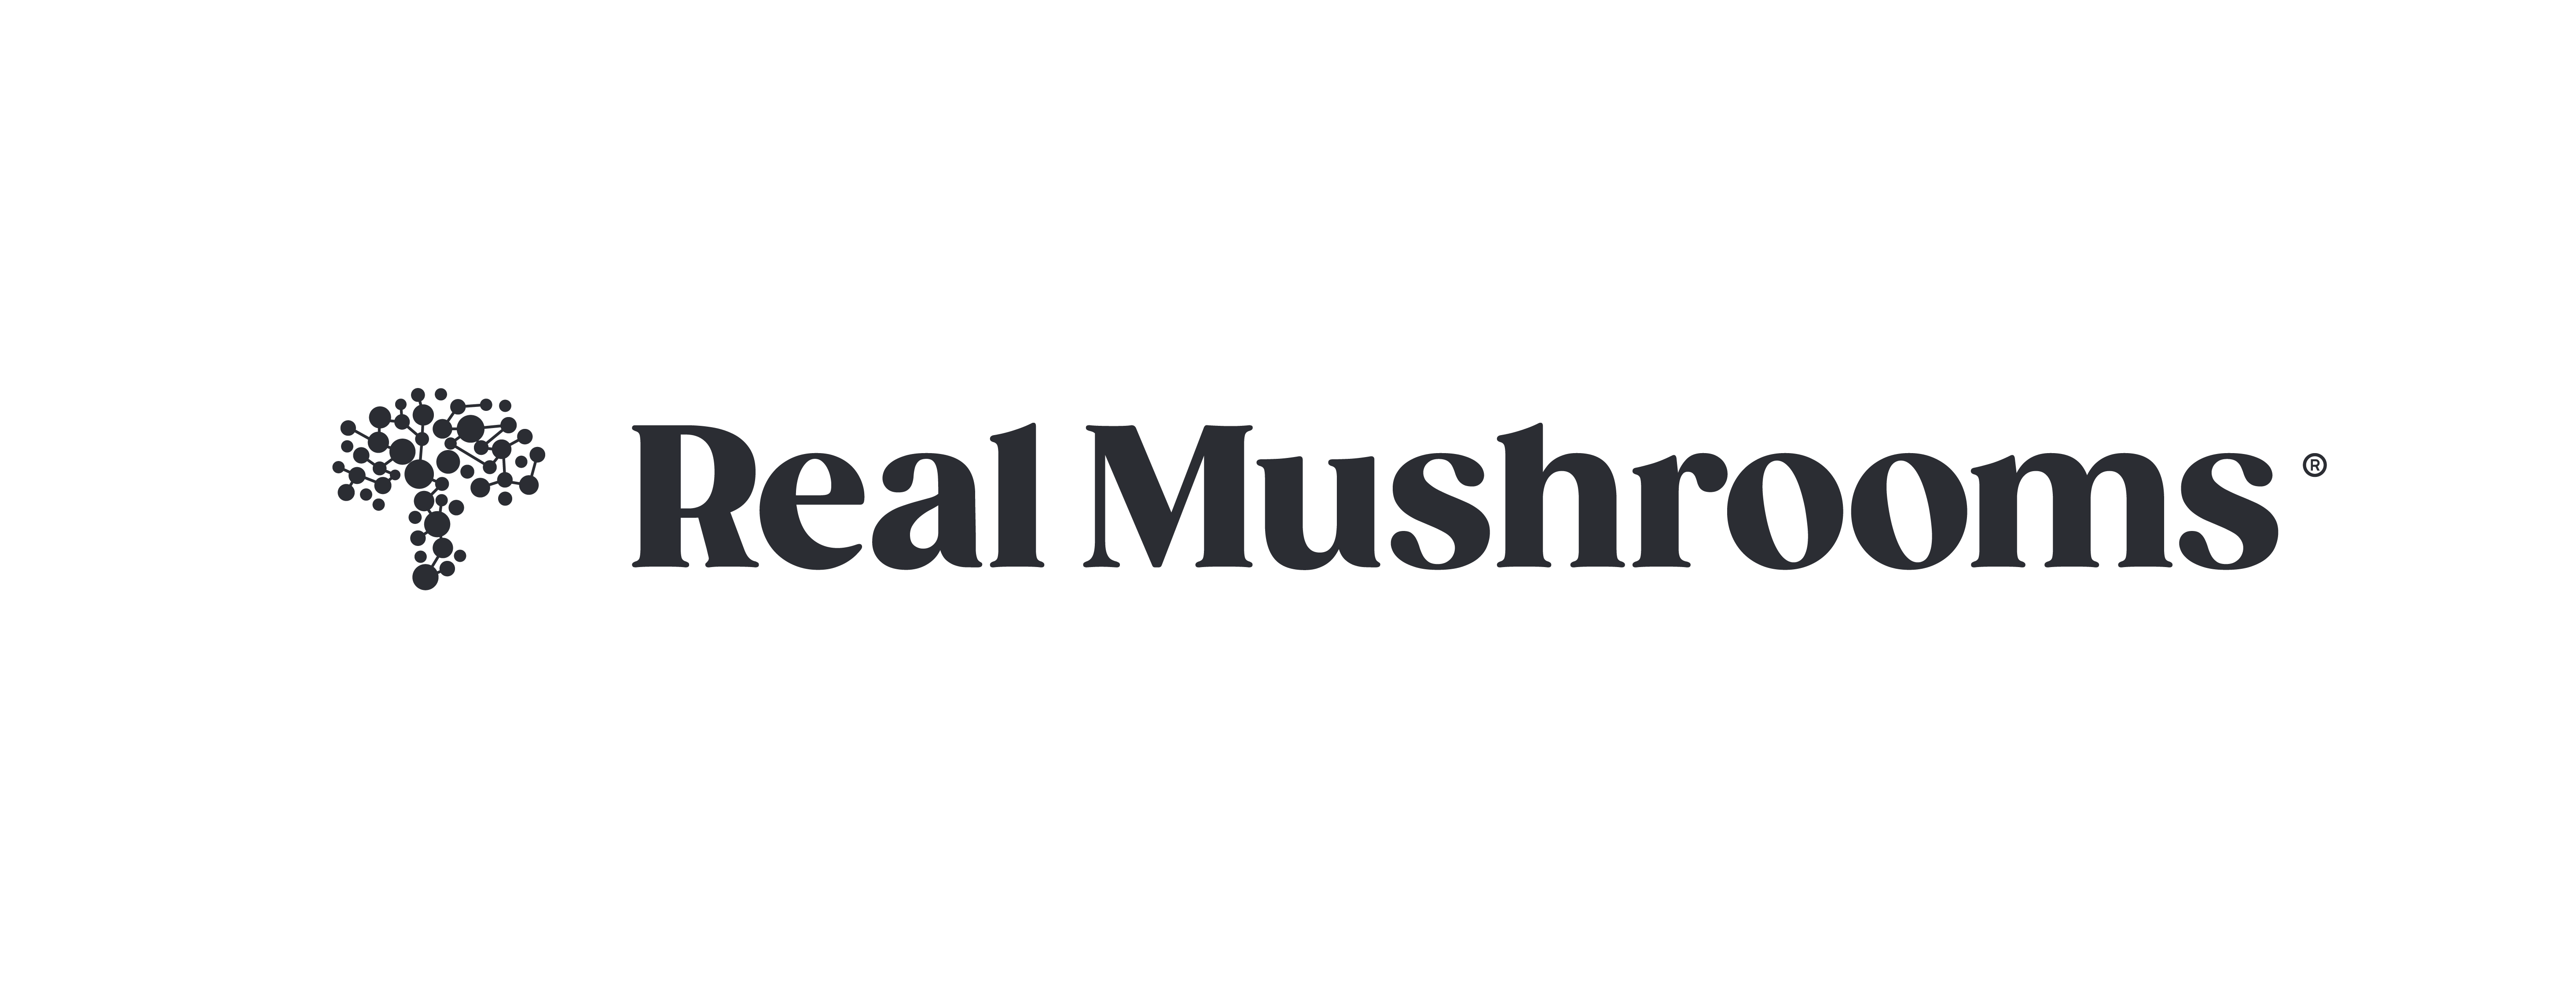 real mushrooms coupons logo